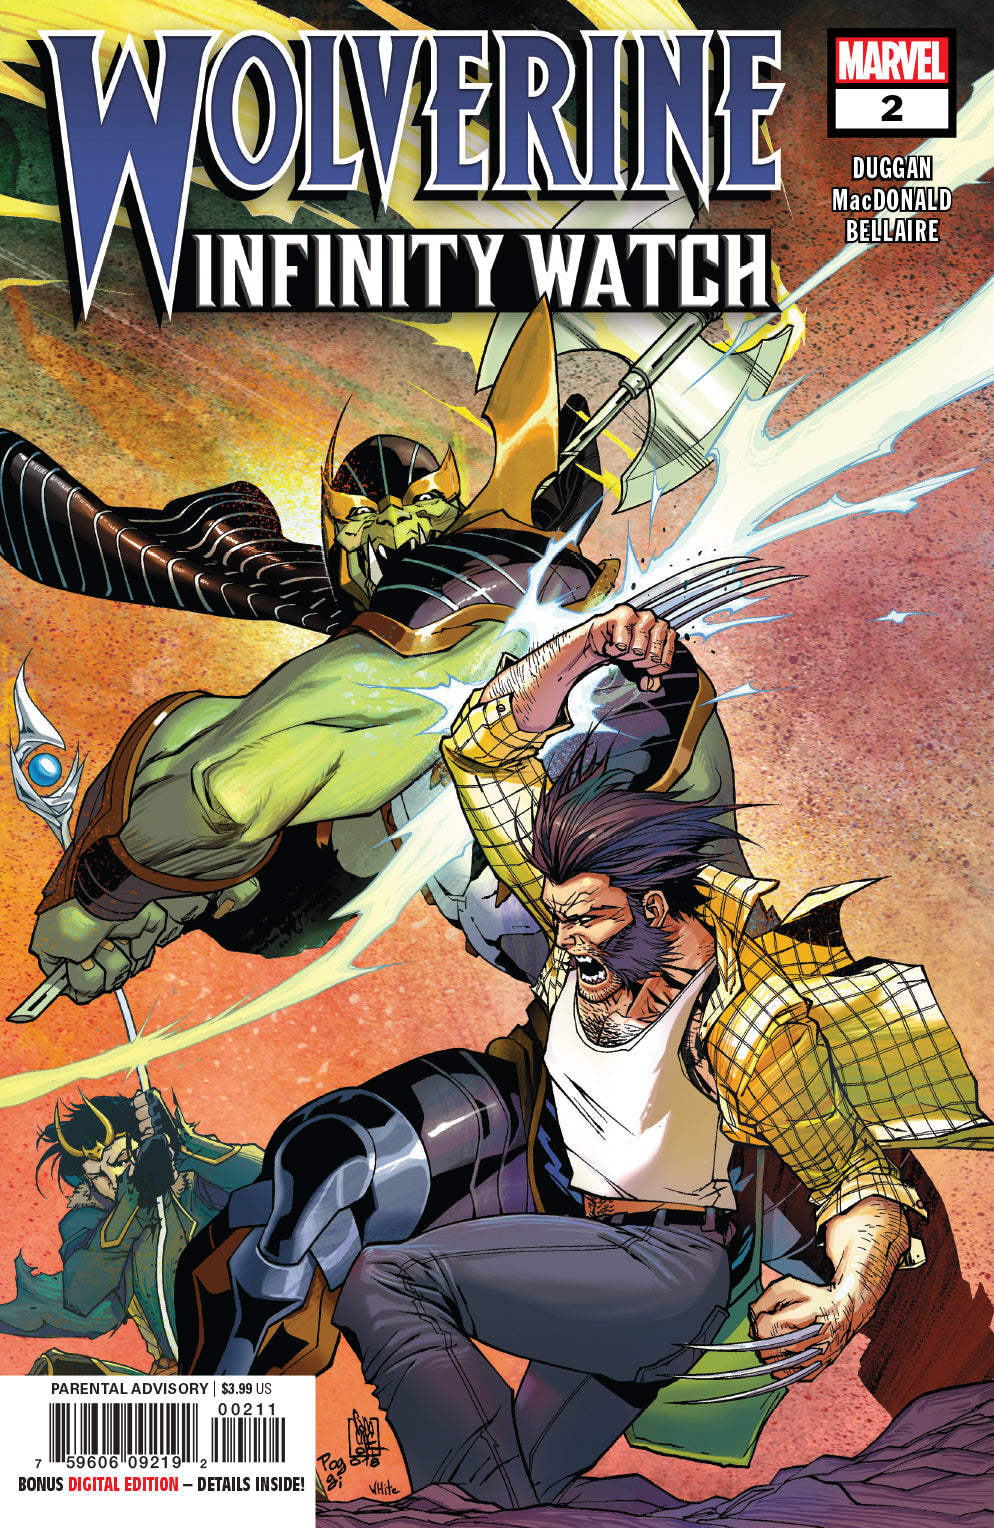 Wolverine Infinity Watch #2